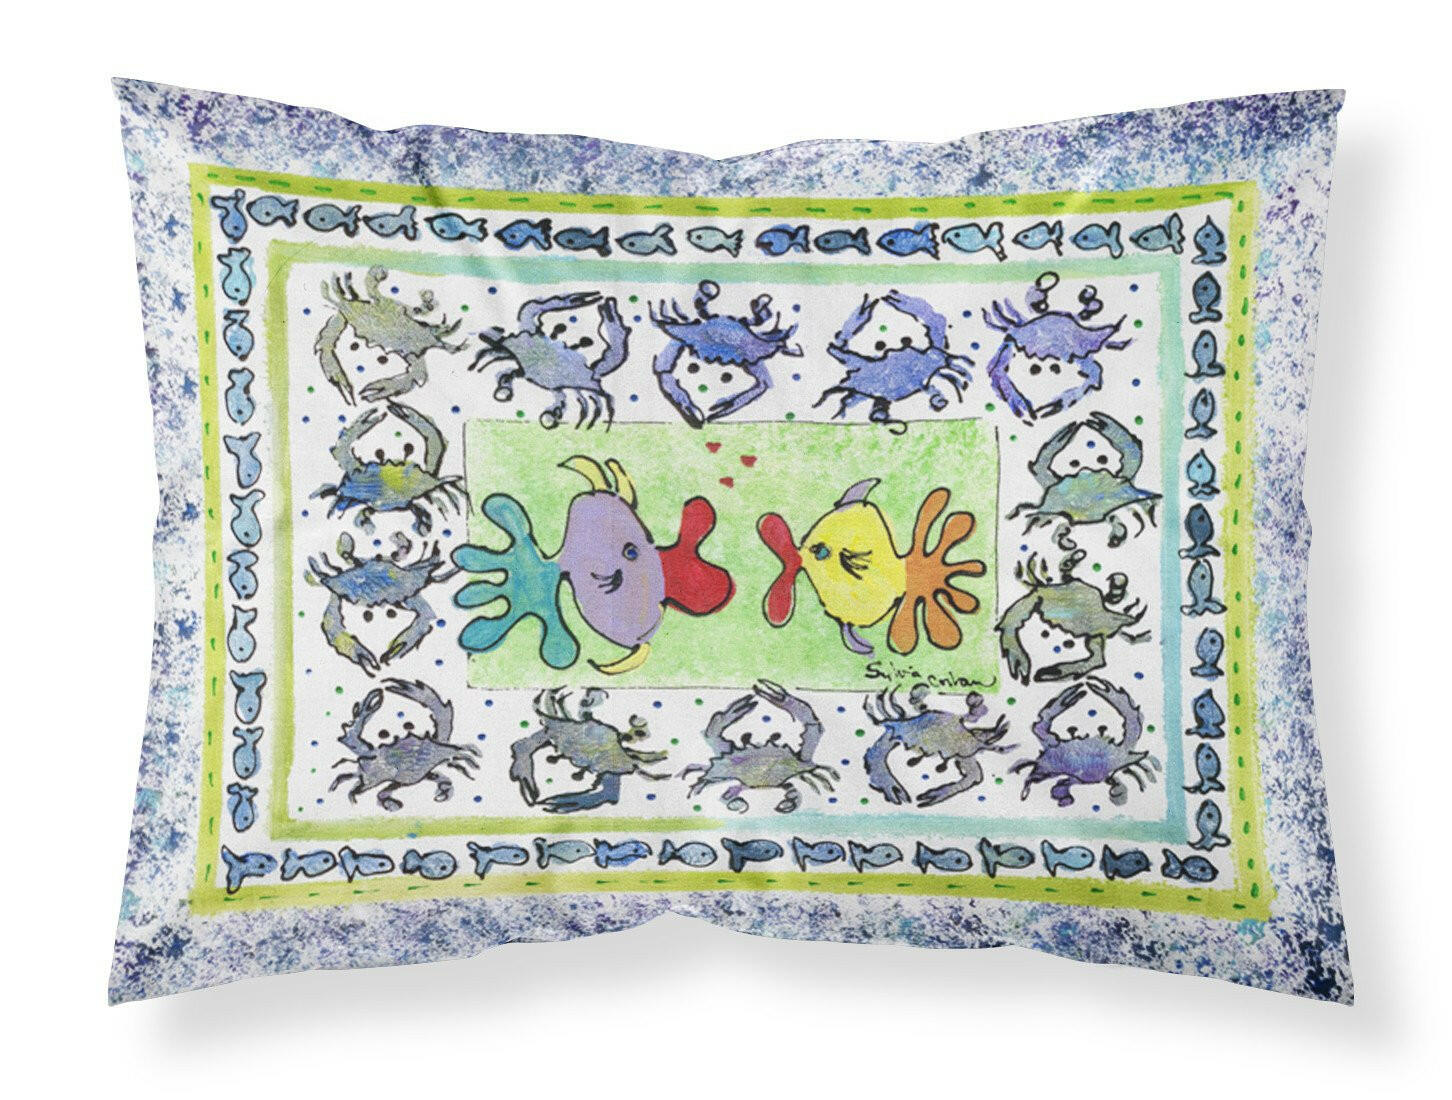 Kissing Fish Moisture wicking Fabric standard pillowcase by Caroline's Treasures